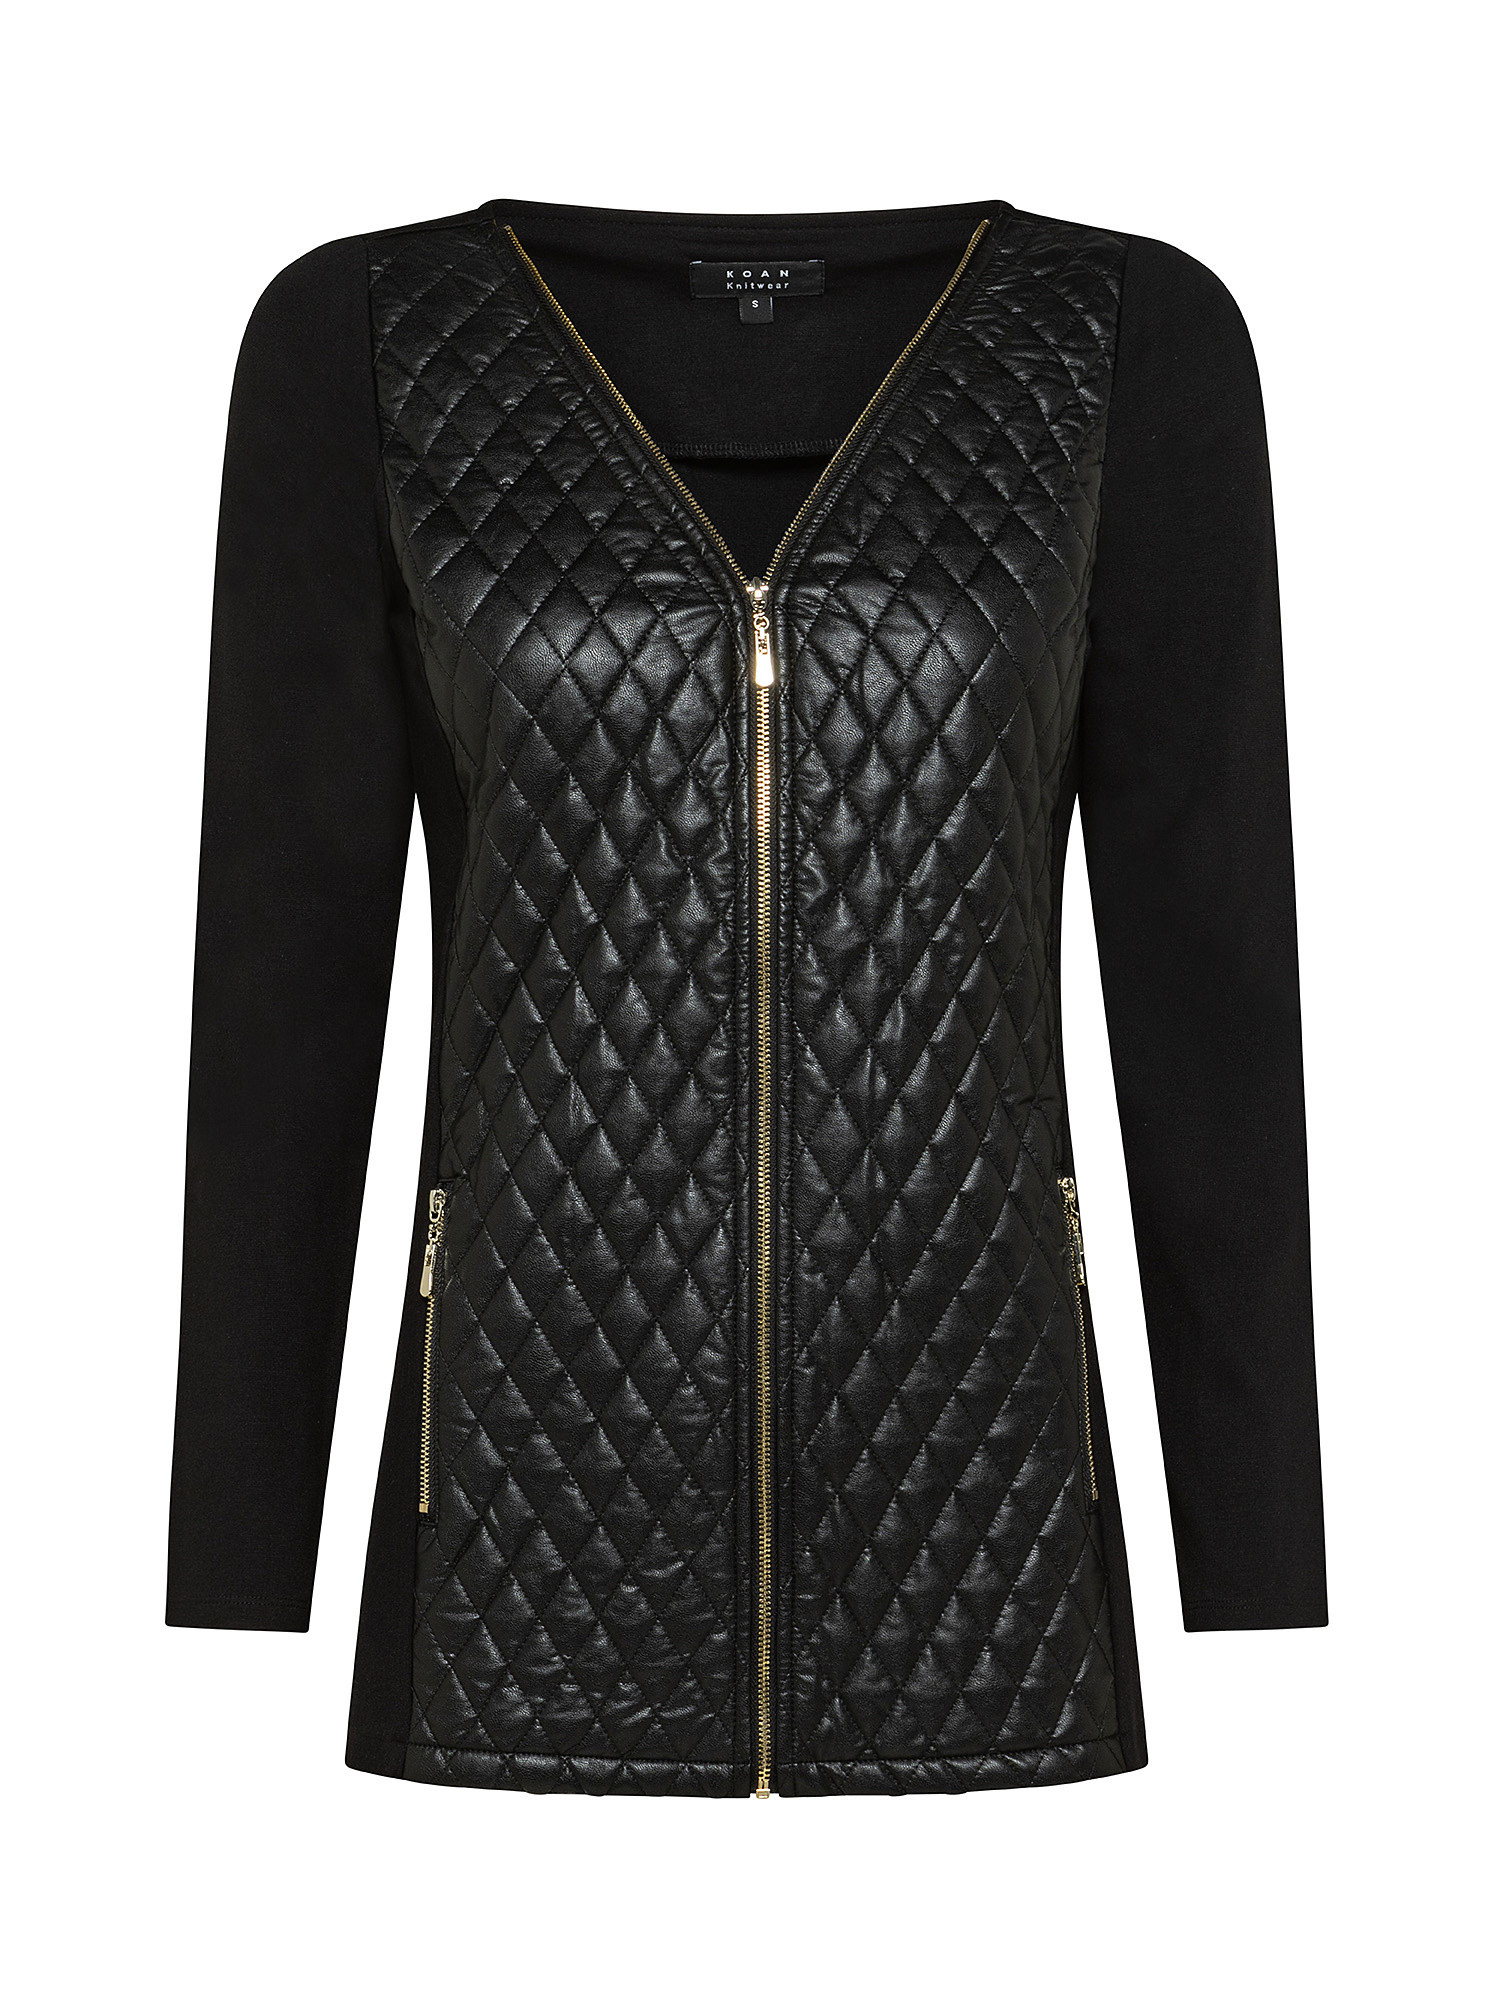 Koan - Long jacket with inserts, Black, large image number 0